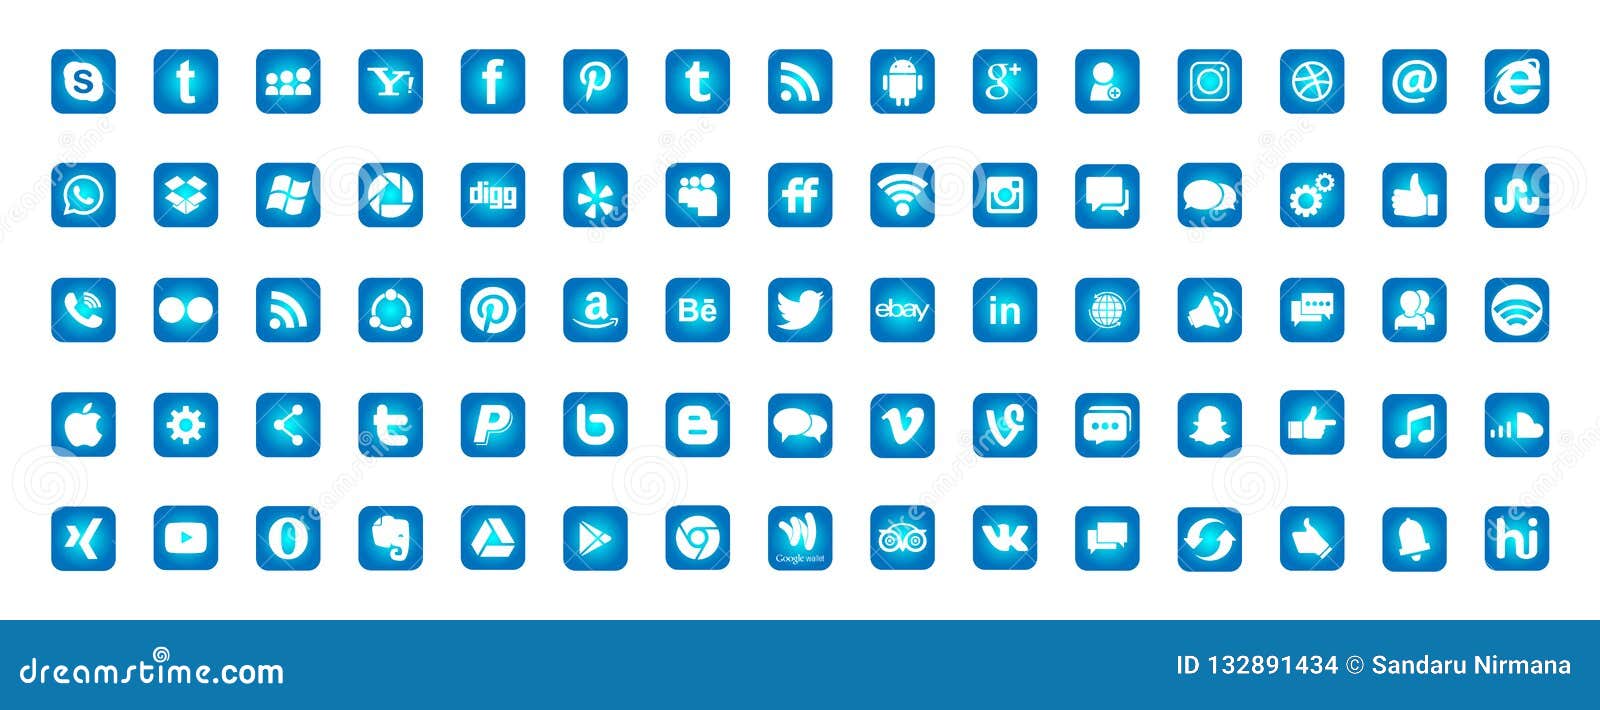 Set Of Popular Social Media Logos Icons Instagram Facebook Twitter Youtube Whatsapp Linkedin Pinterest Blogd On White Background Editorial Stock Image Illustration Of Logos Blue